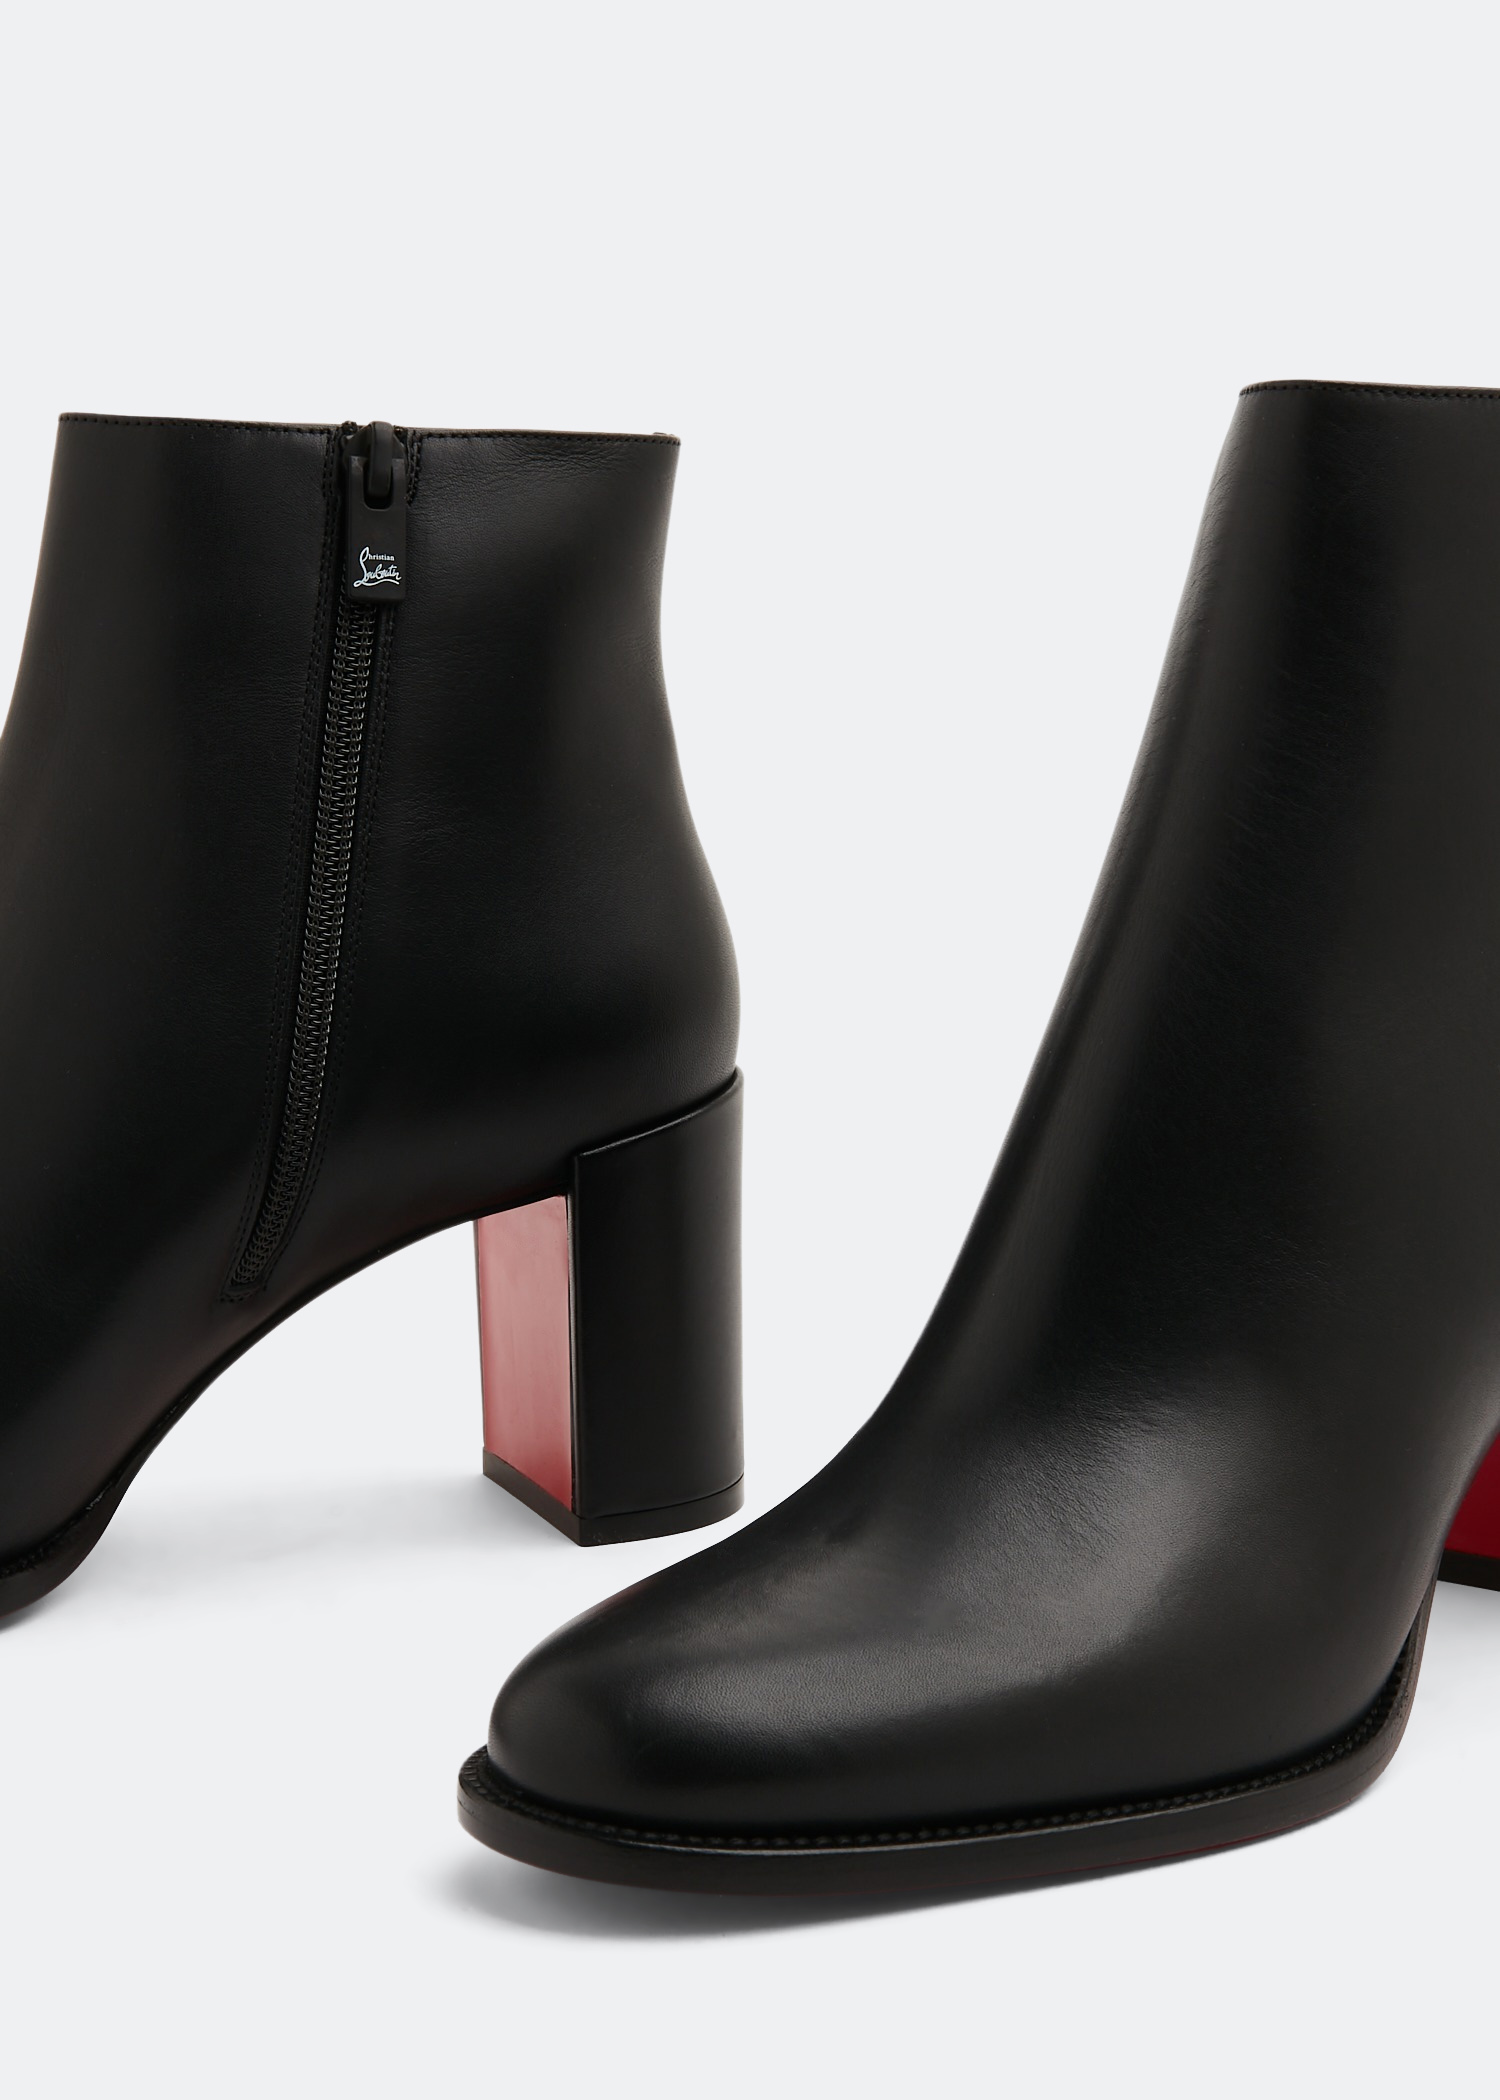 Christian Louboutin Adoxa 70 boots for Women - Black in UAE